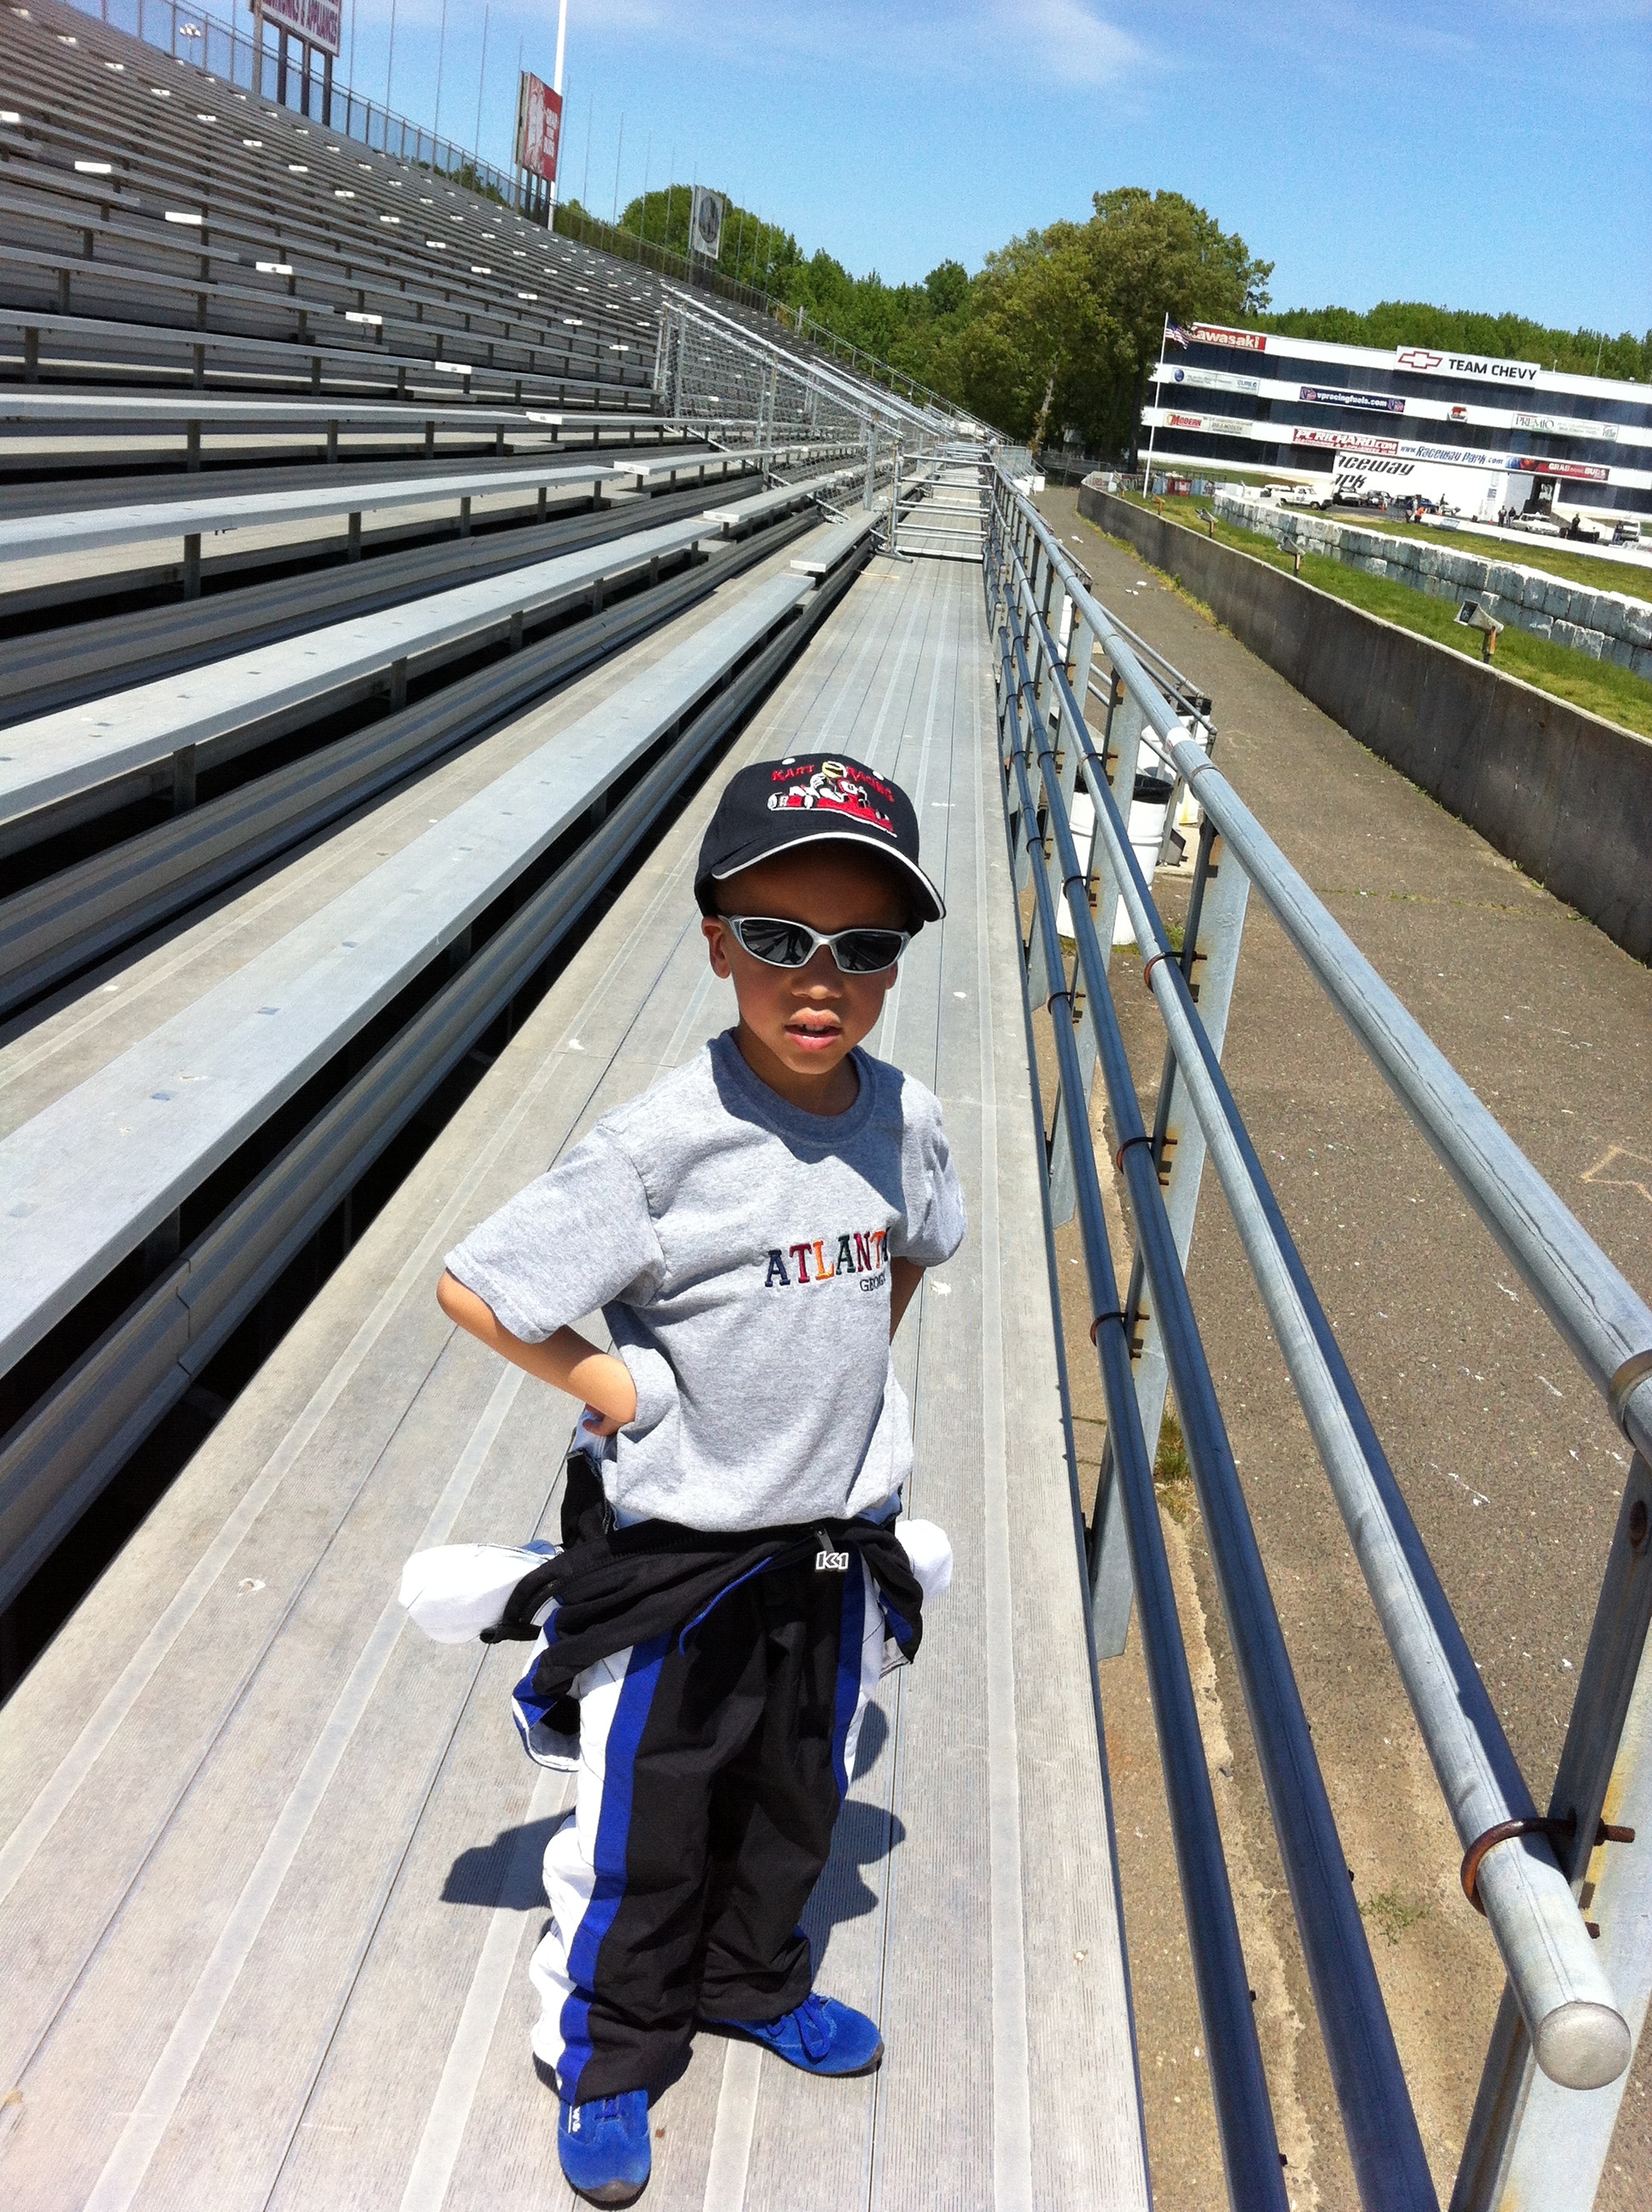 Having fun, kid kart racing today